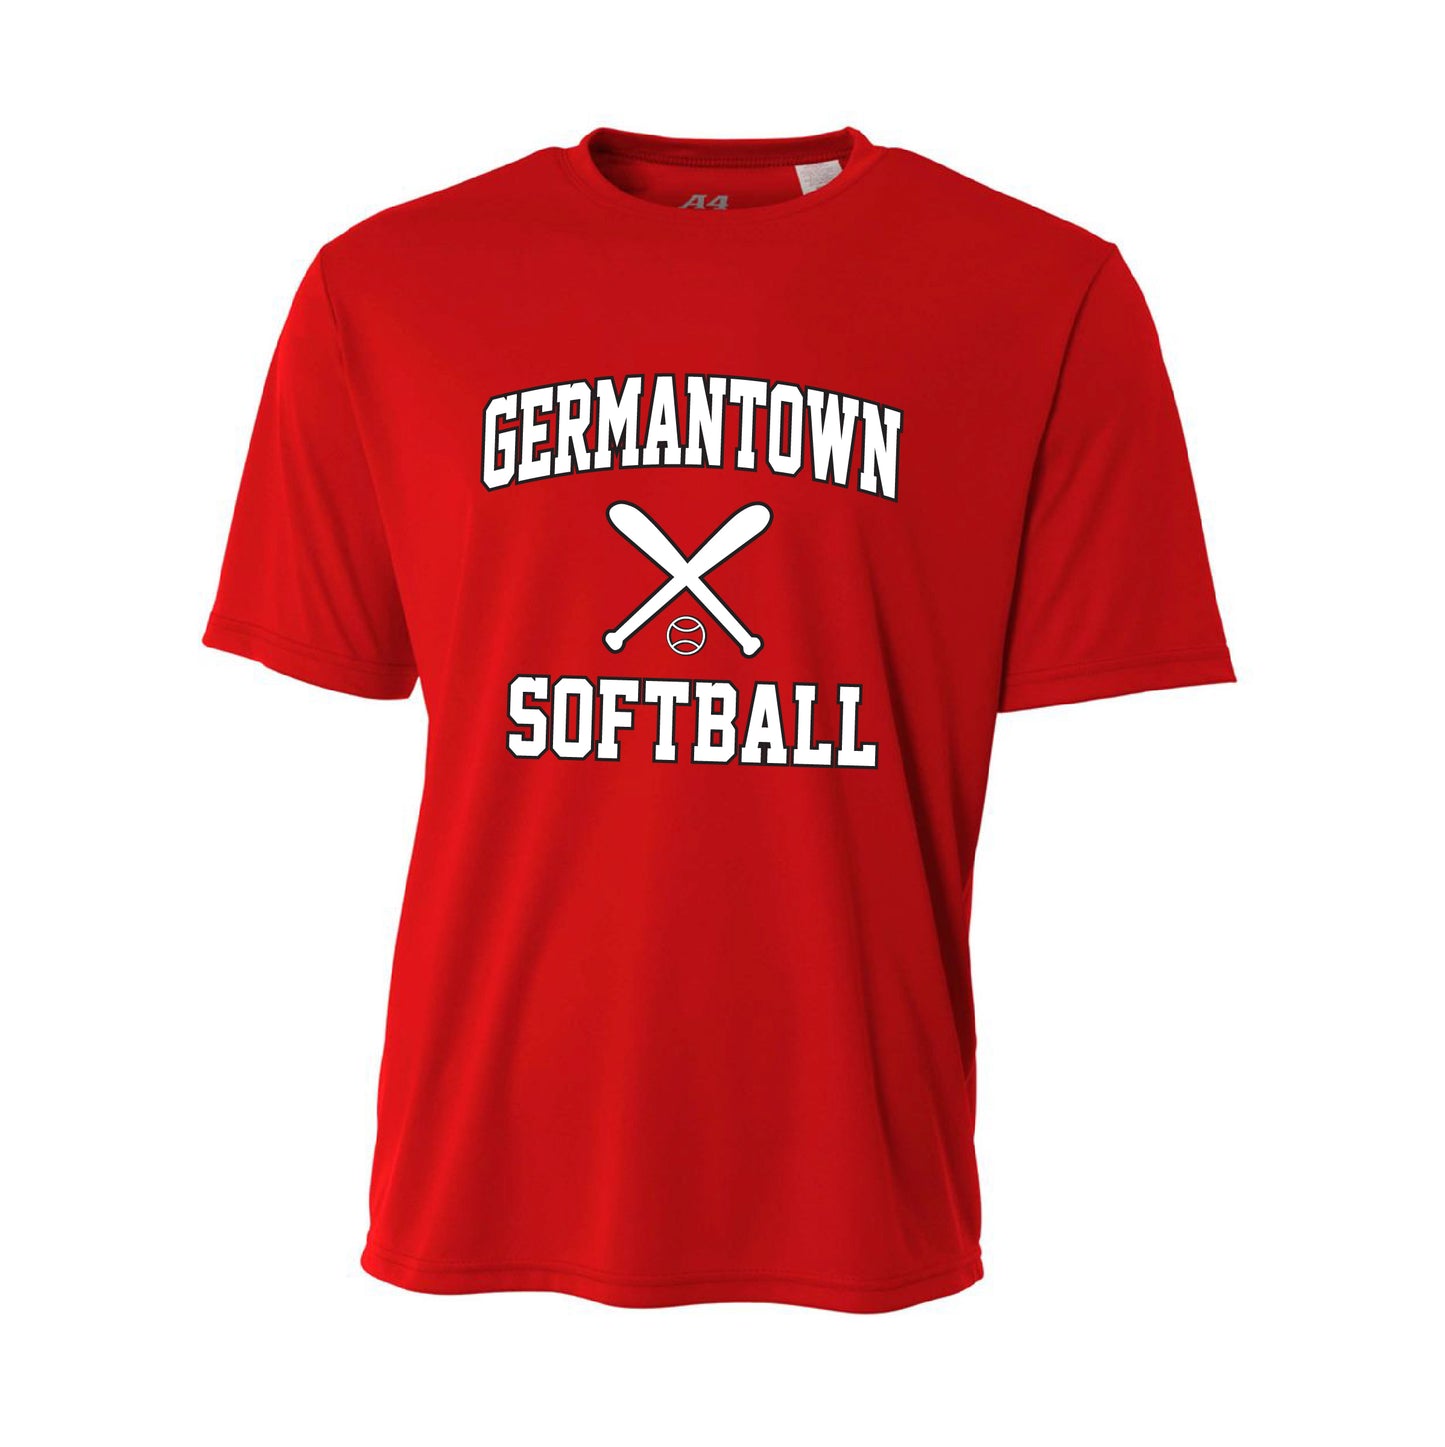 Germantown Softball - Red Jersey - 12879 10U